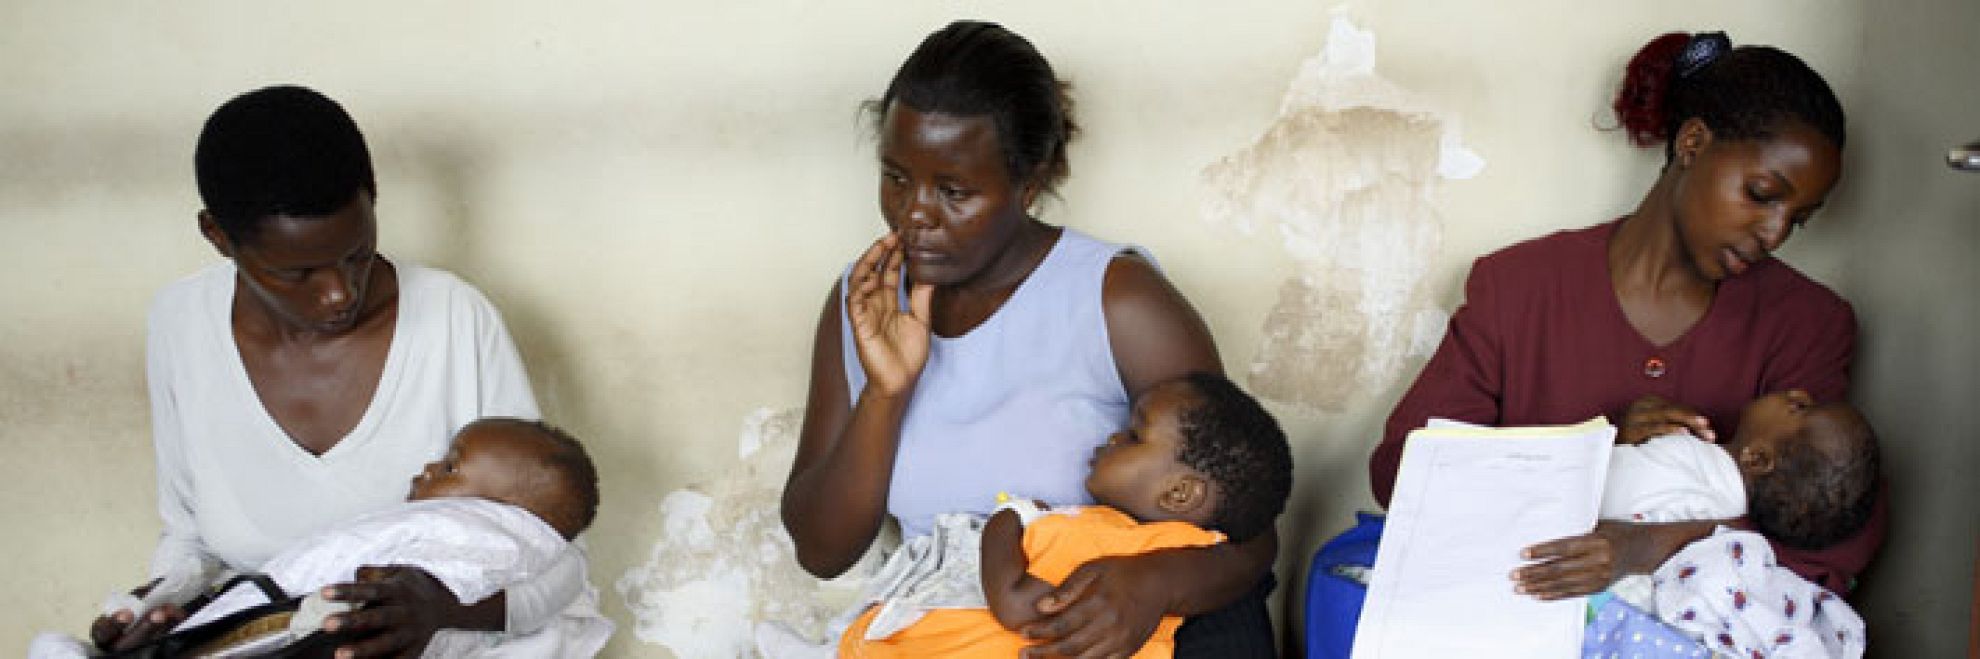 Latest News Malaria consortium welcomes clinton museveni pledge to eliminate diarrhoeal deaths in uganda